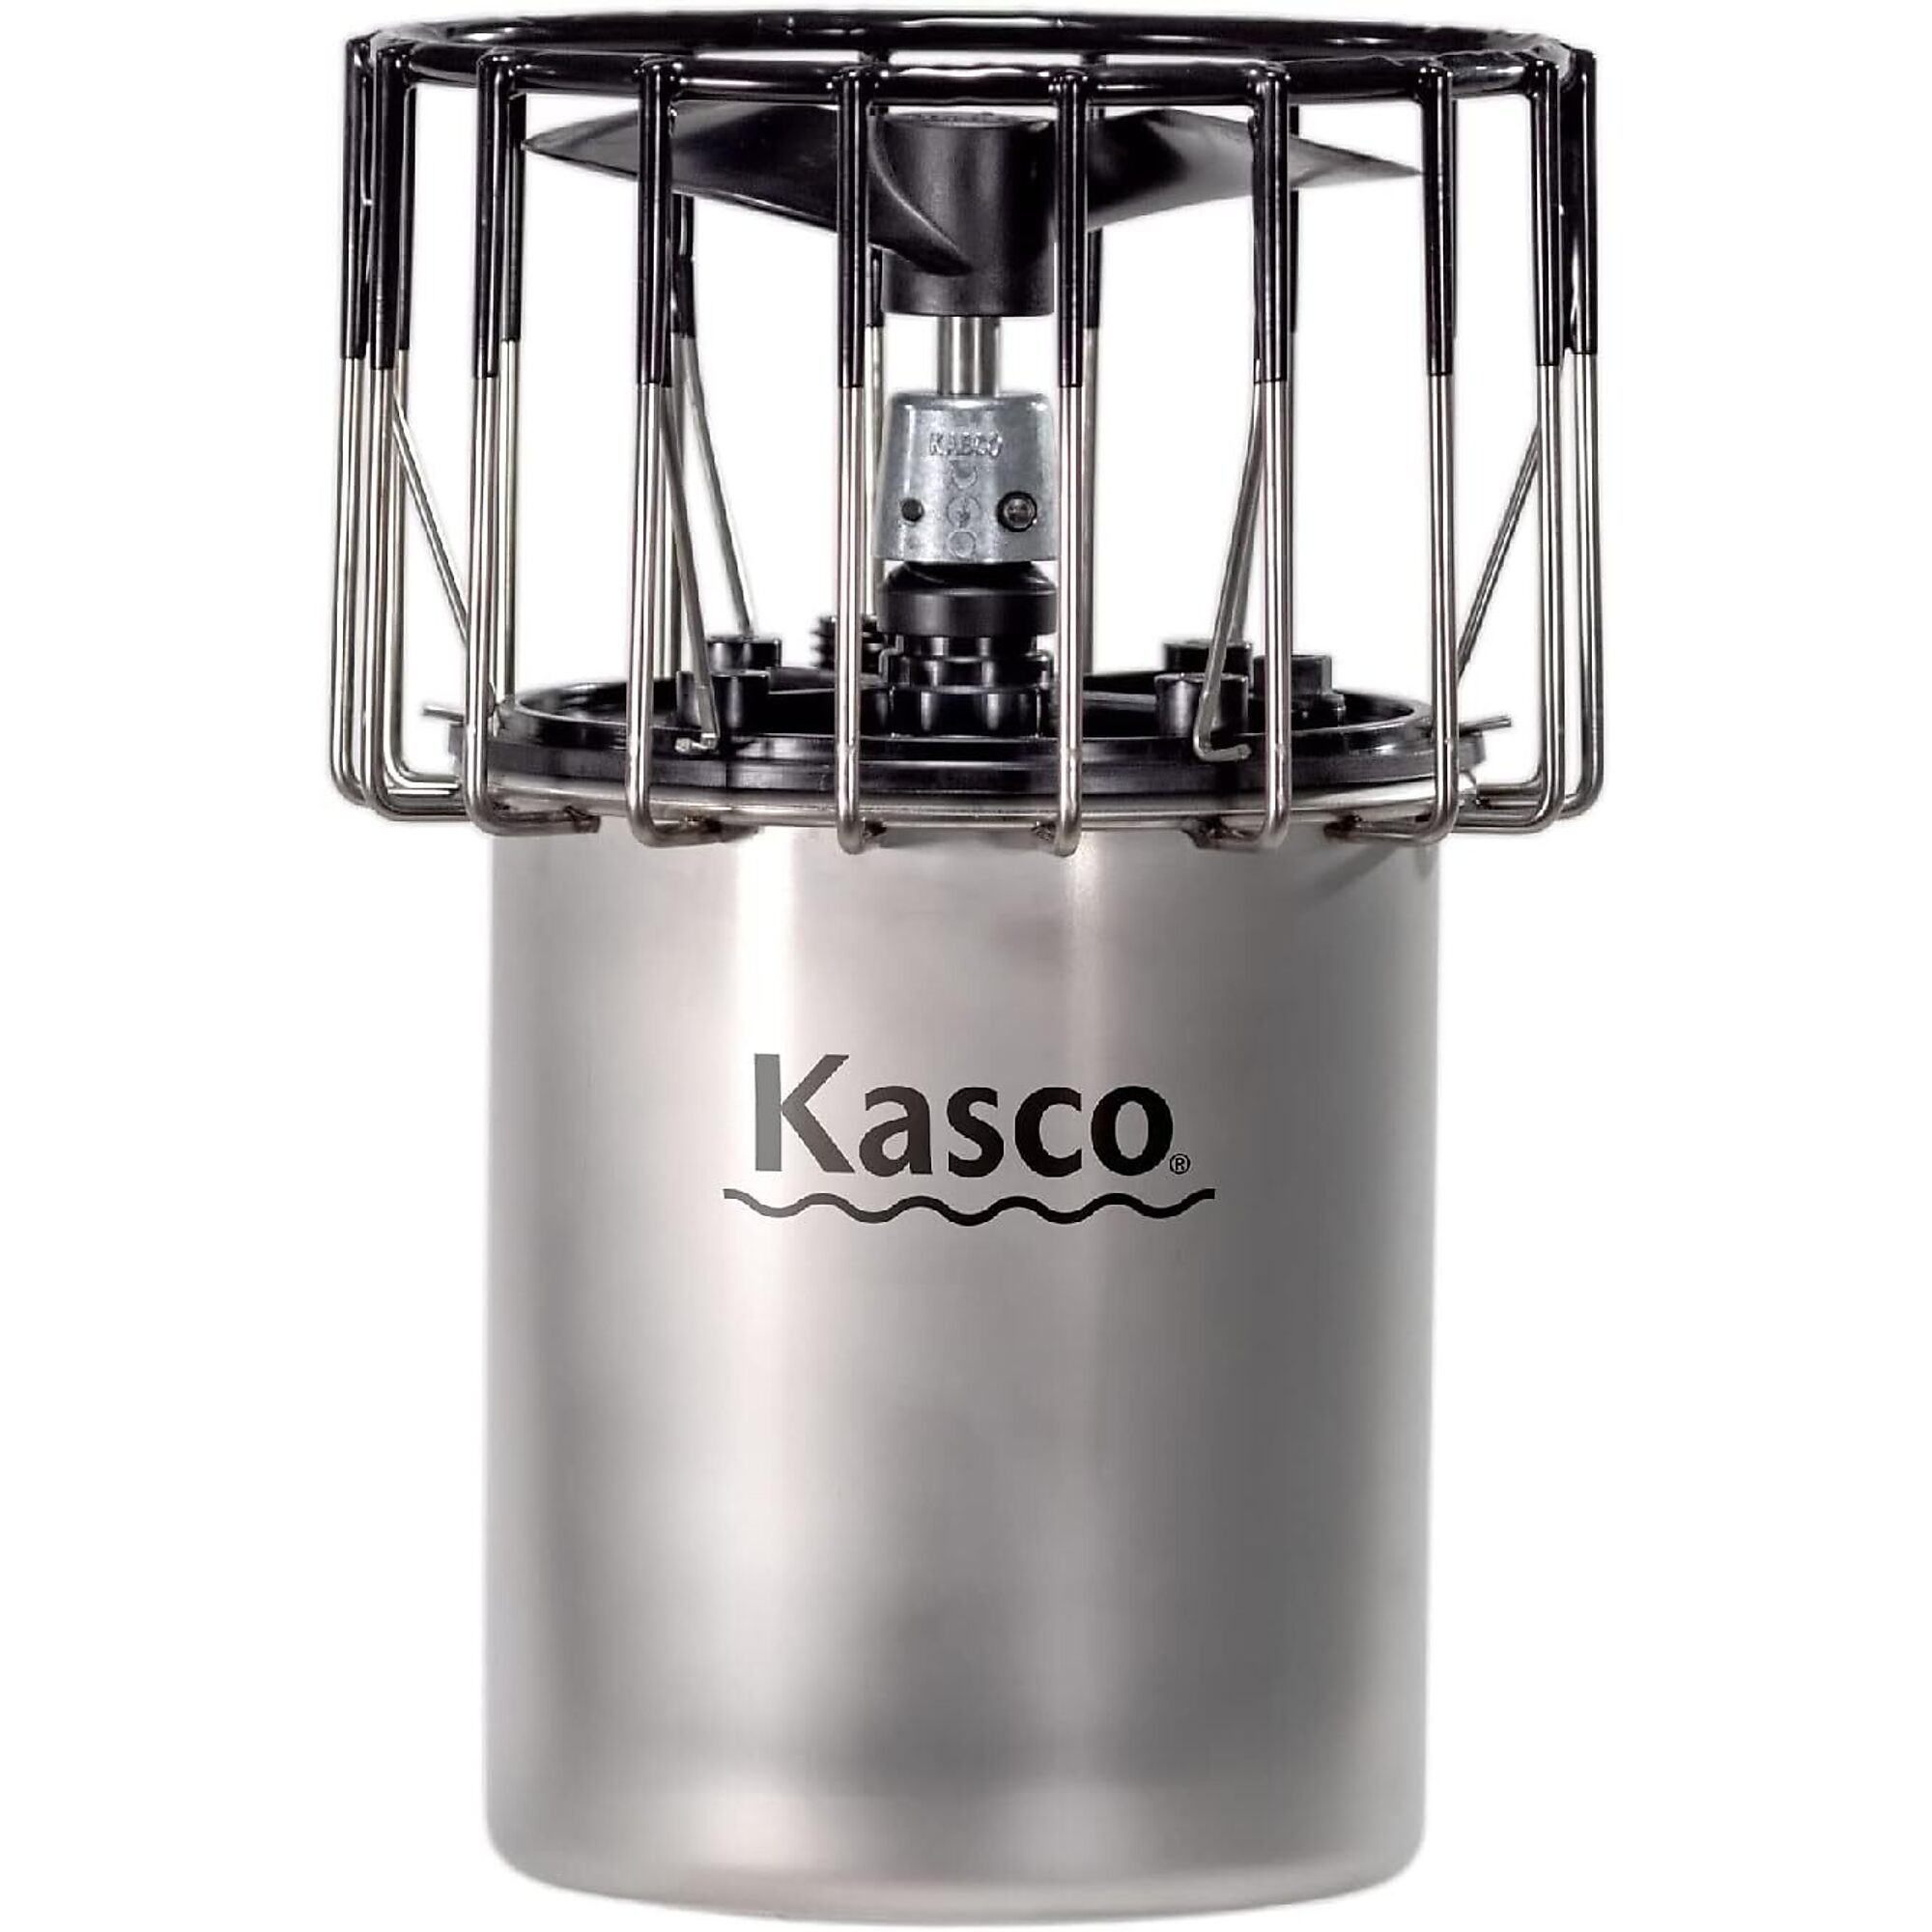 Kasco, De-icer Single for Pond and Lake Bubbler 240V, Volts 240 Power Cord Length 150 ft, Model 3400HD150